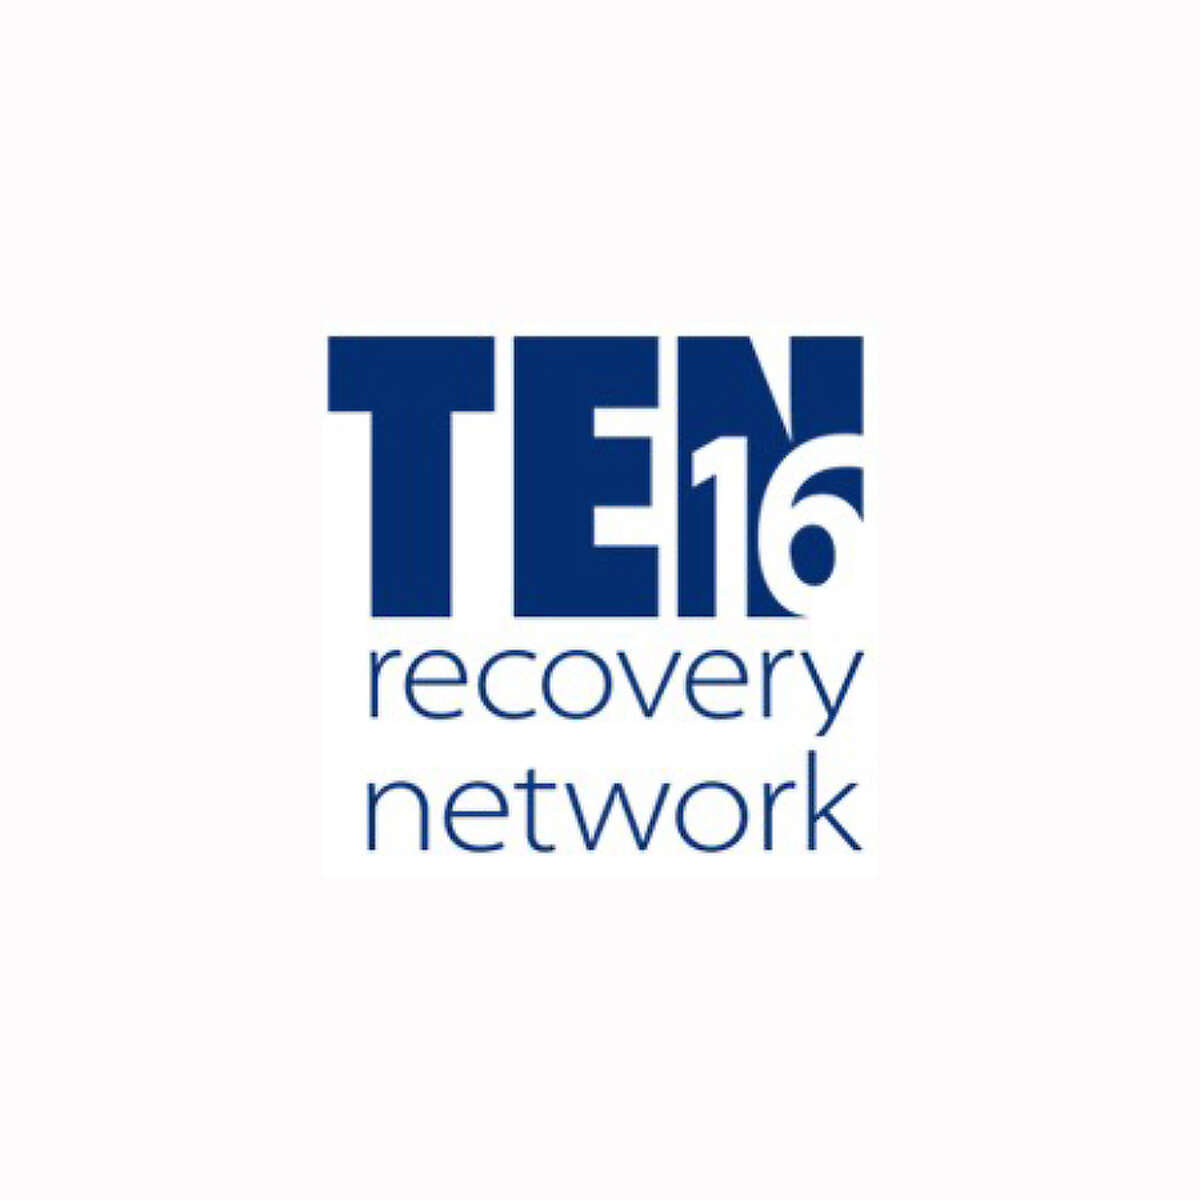 Ten16 logo